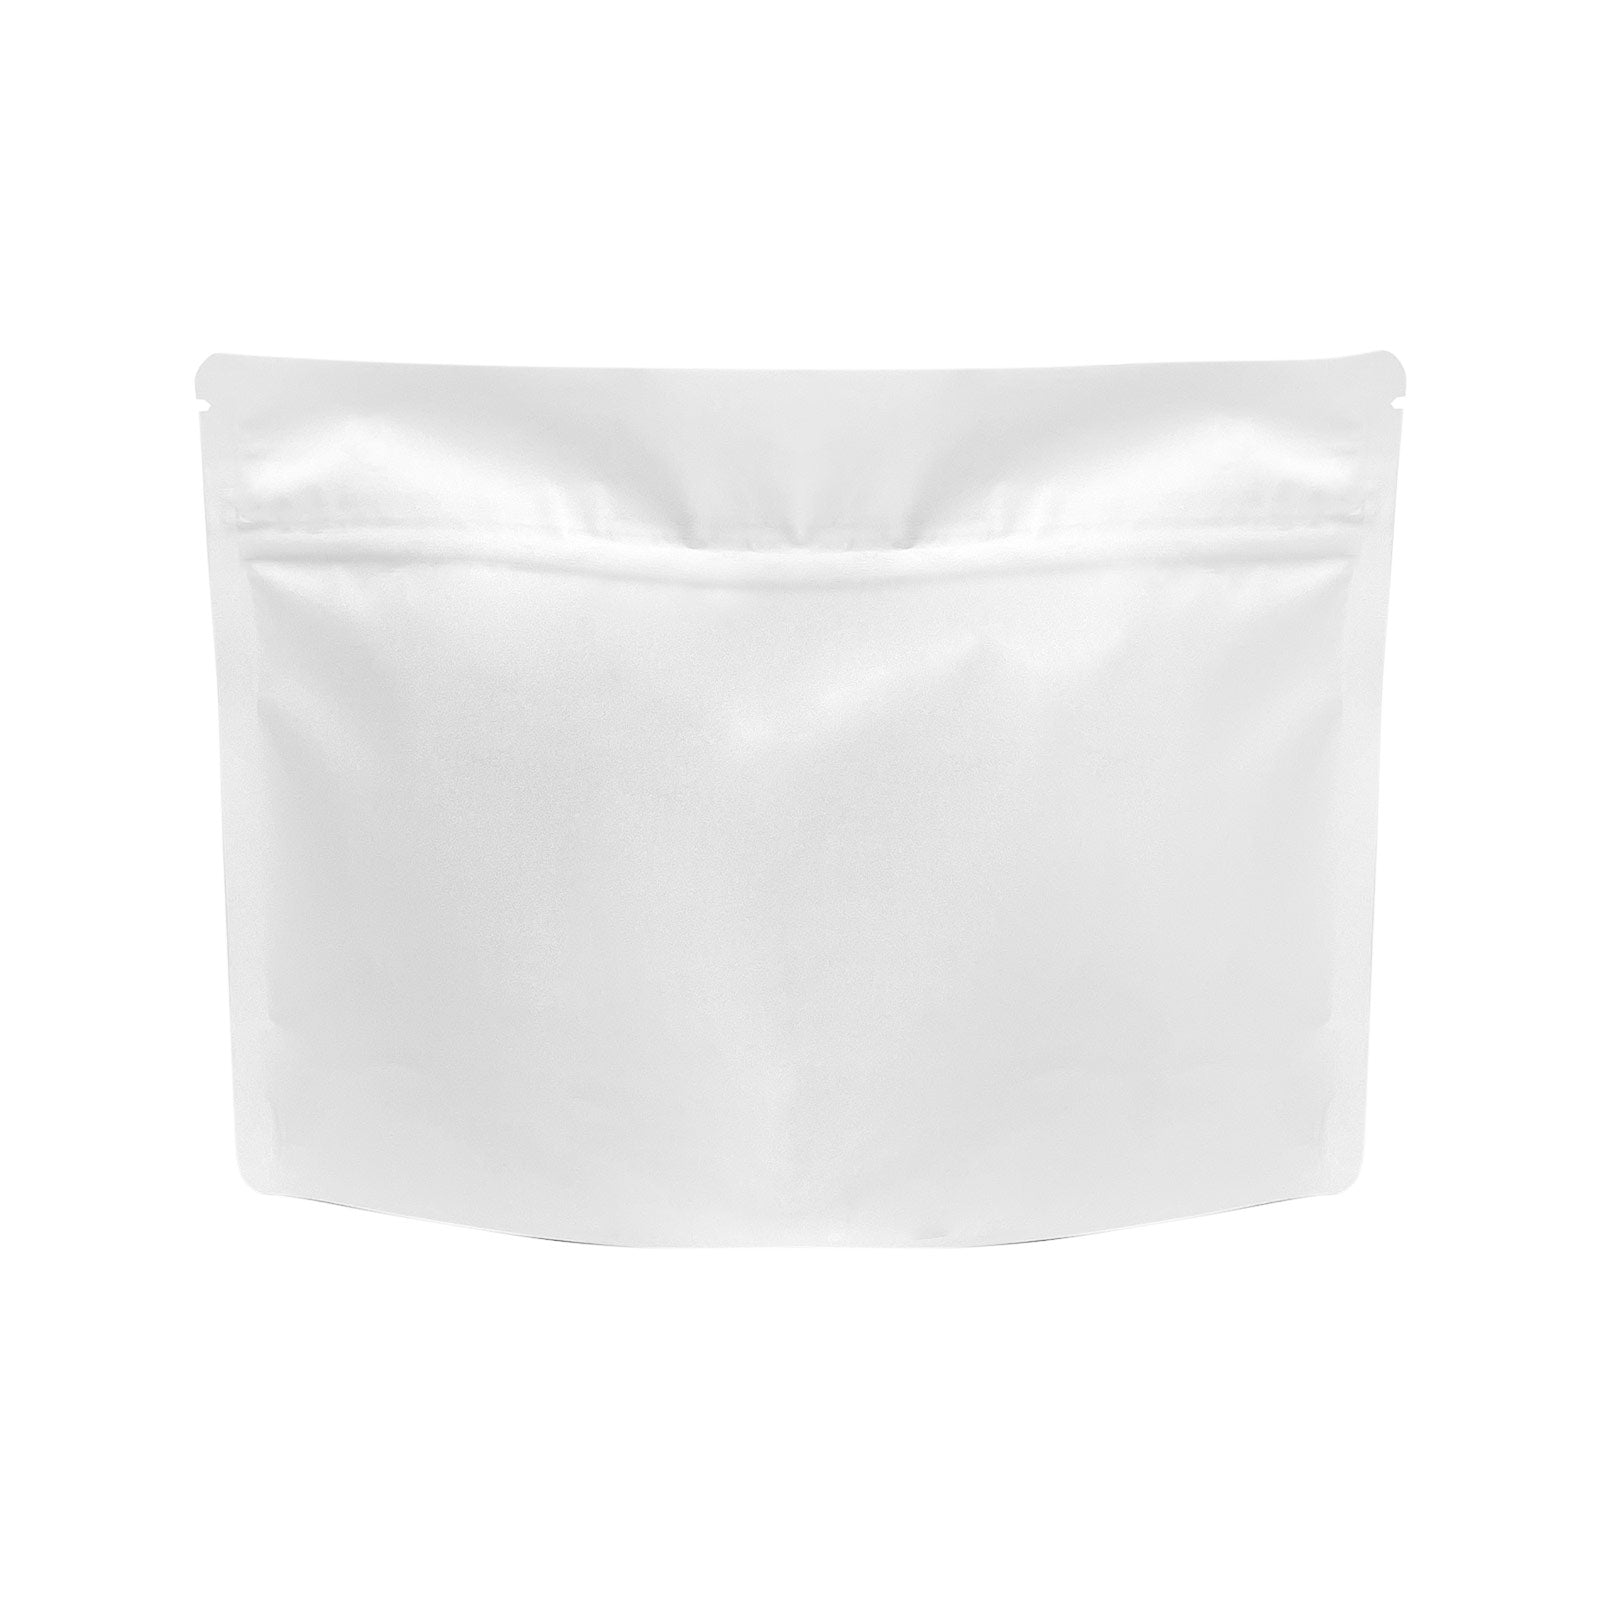 8"x6" Medium Child Resistant Exit Bags All White - 100 Count